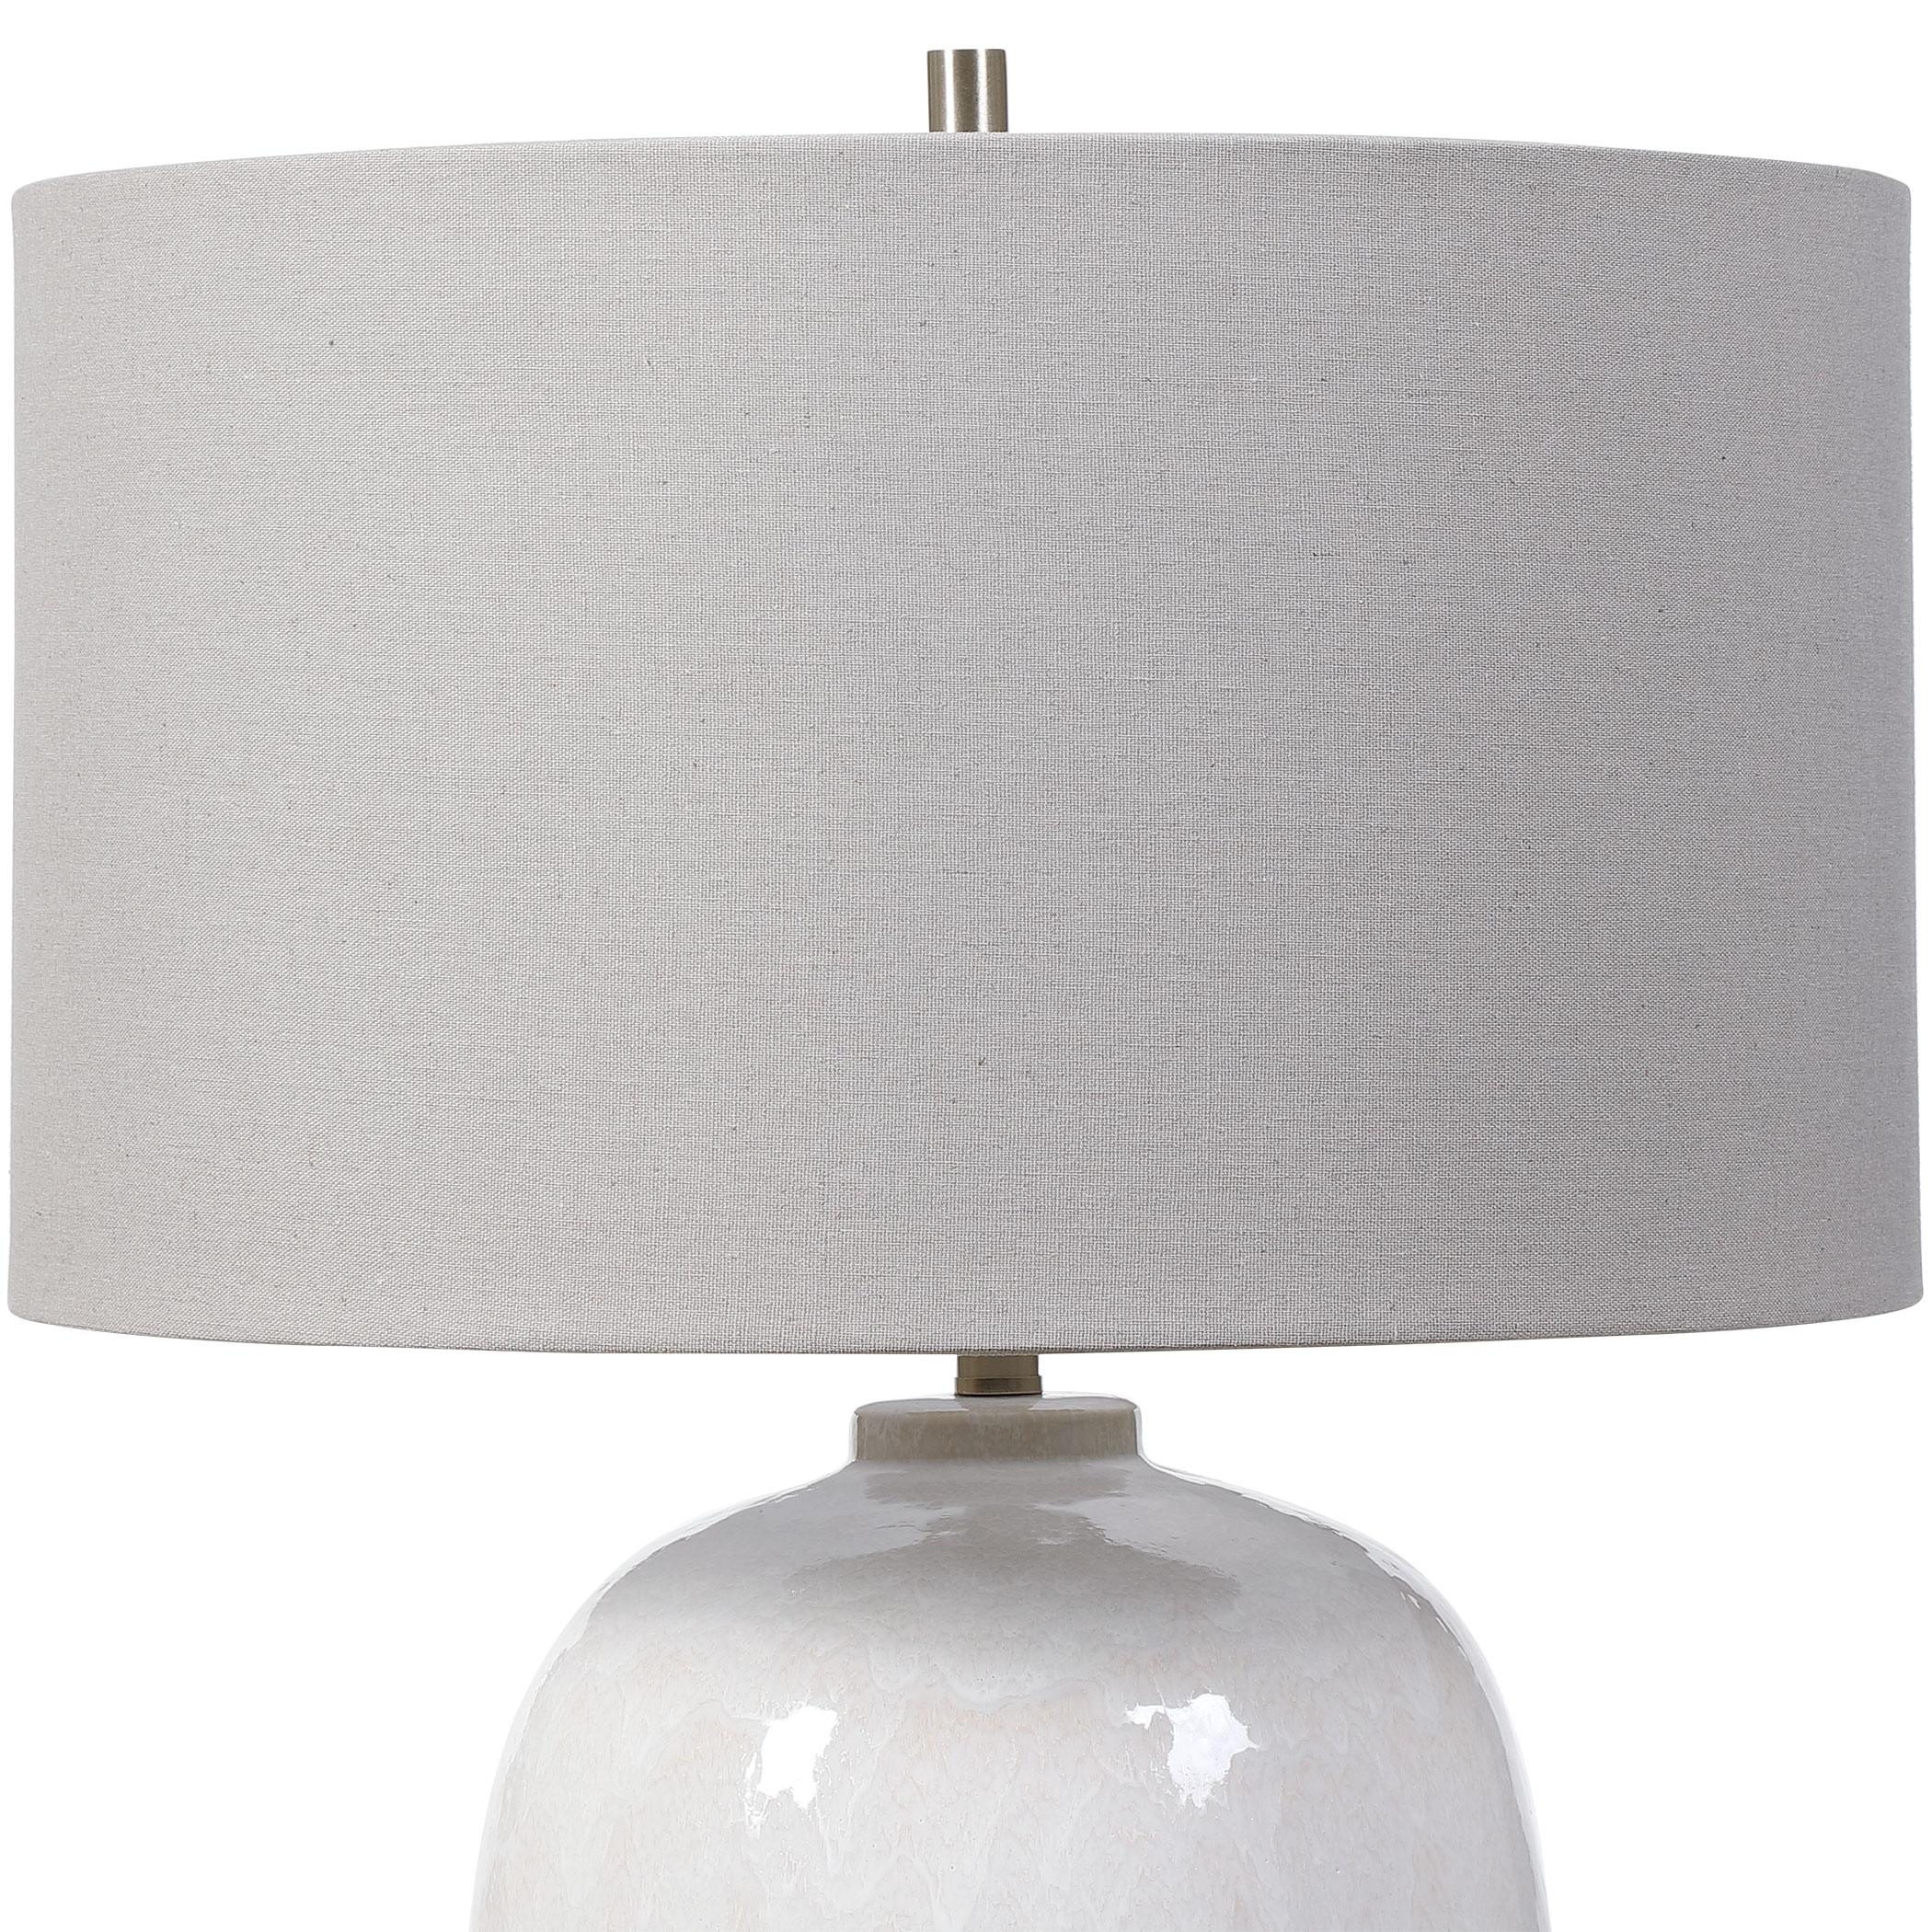 Winterscape Table Lamp, White Glaze - Image 3